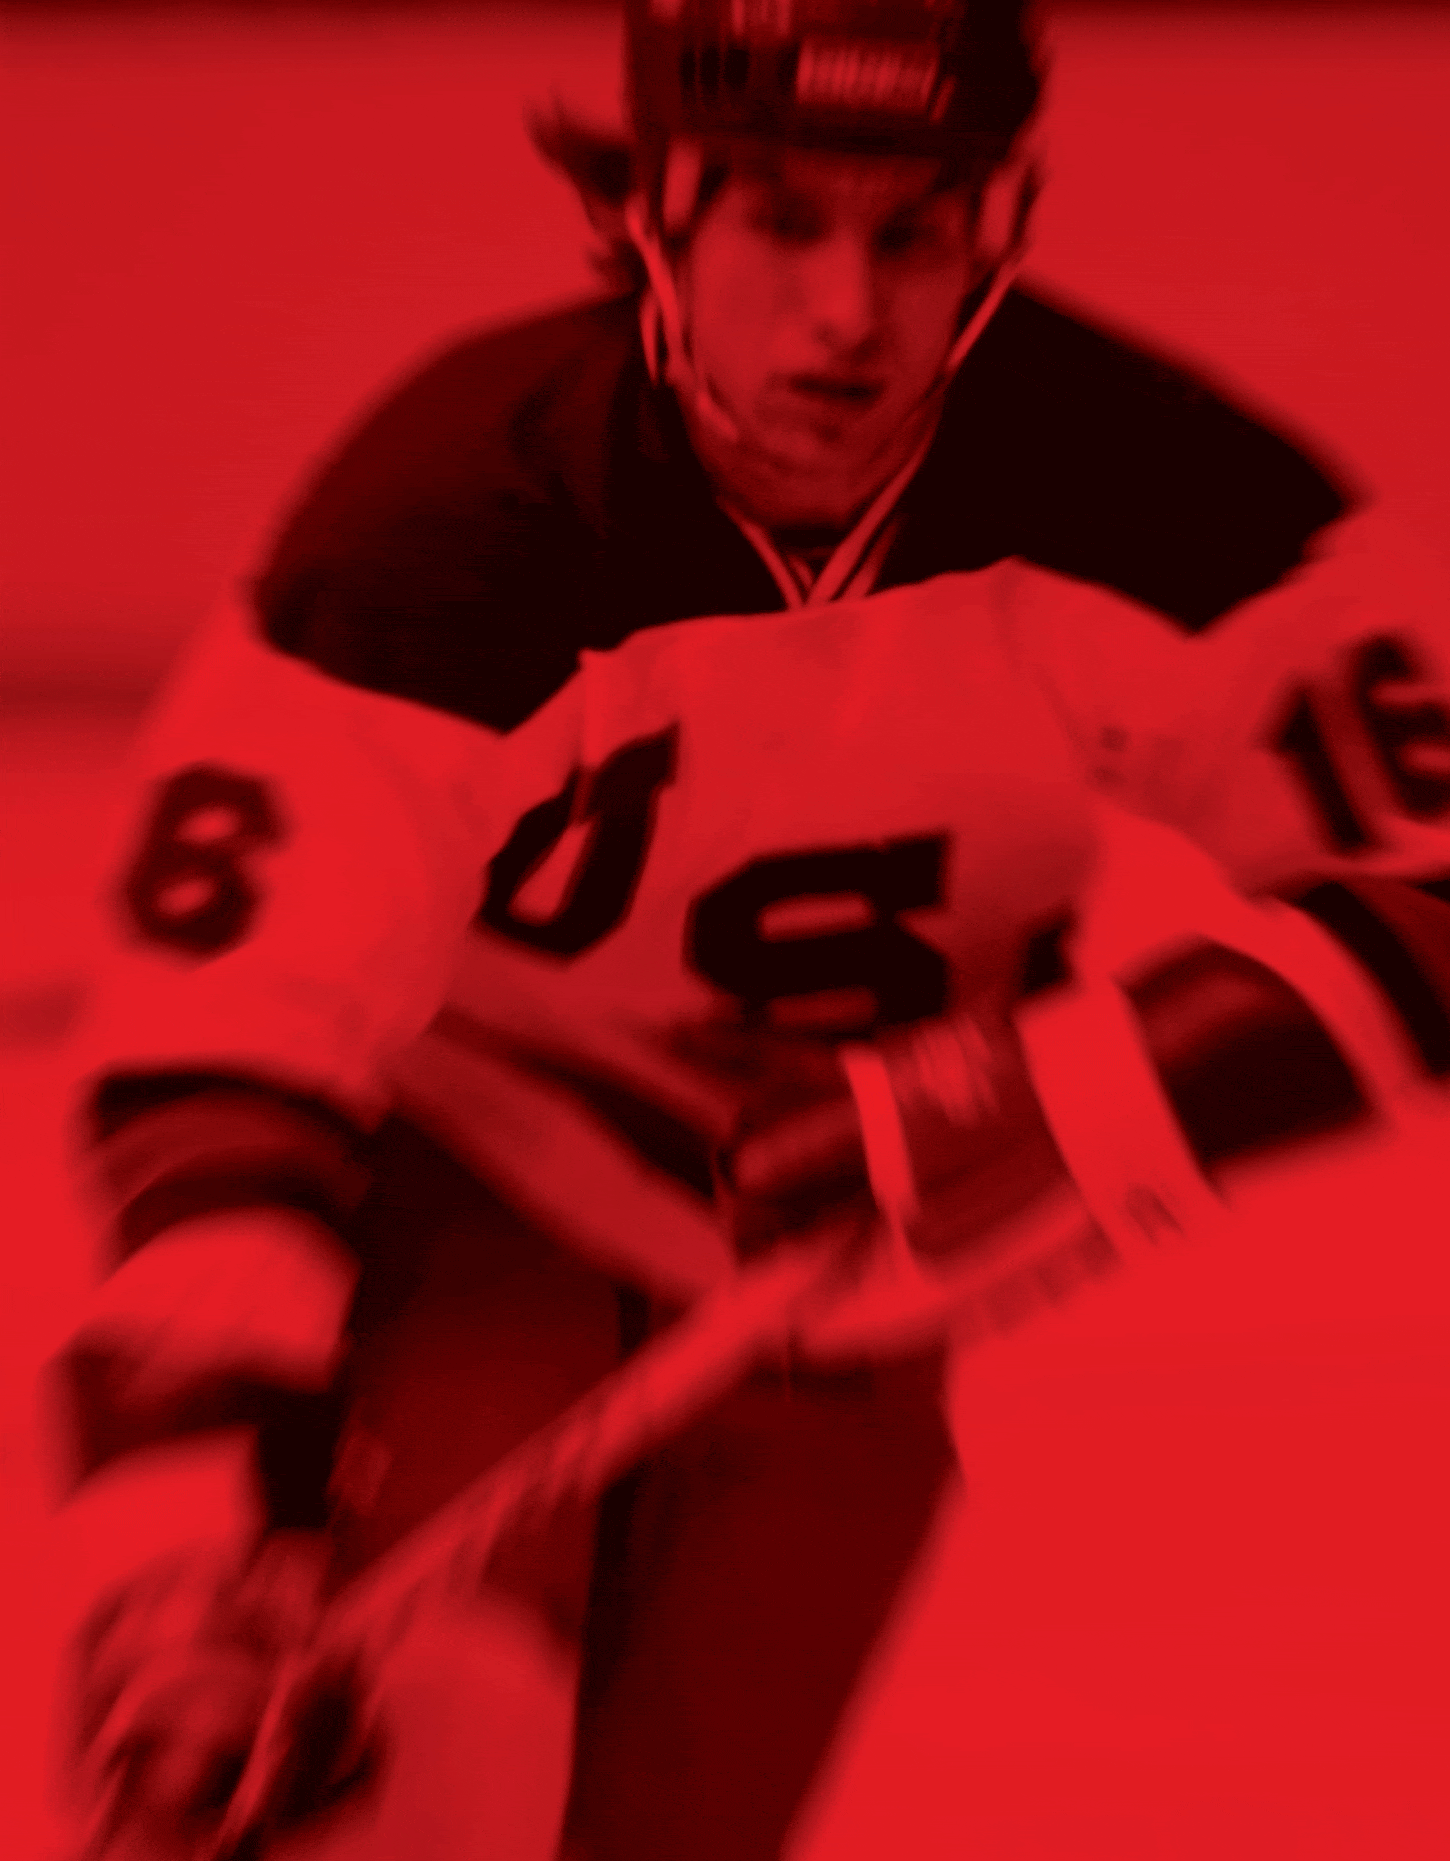 Why a Canadian hockey team's name recalls US Civil War destruction